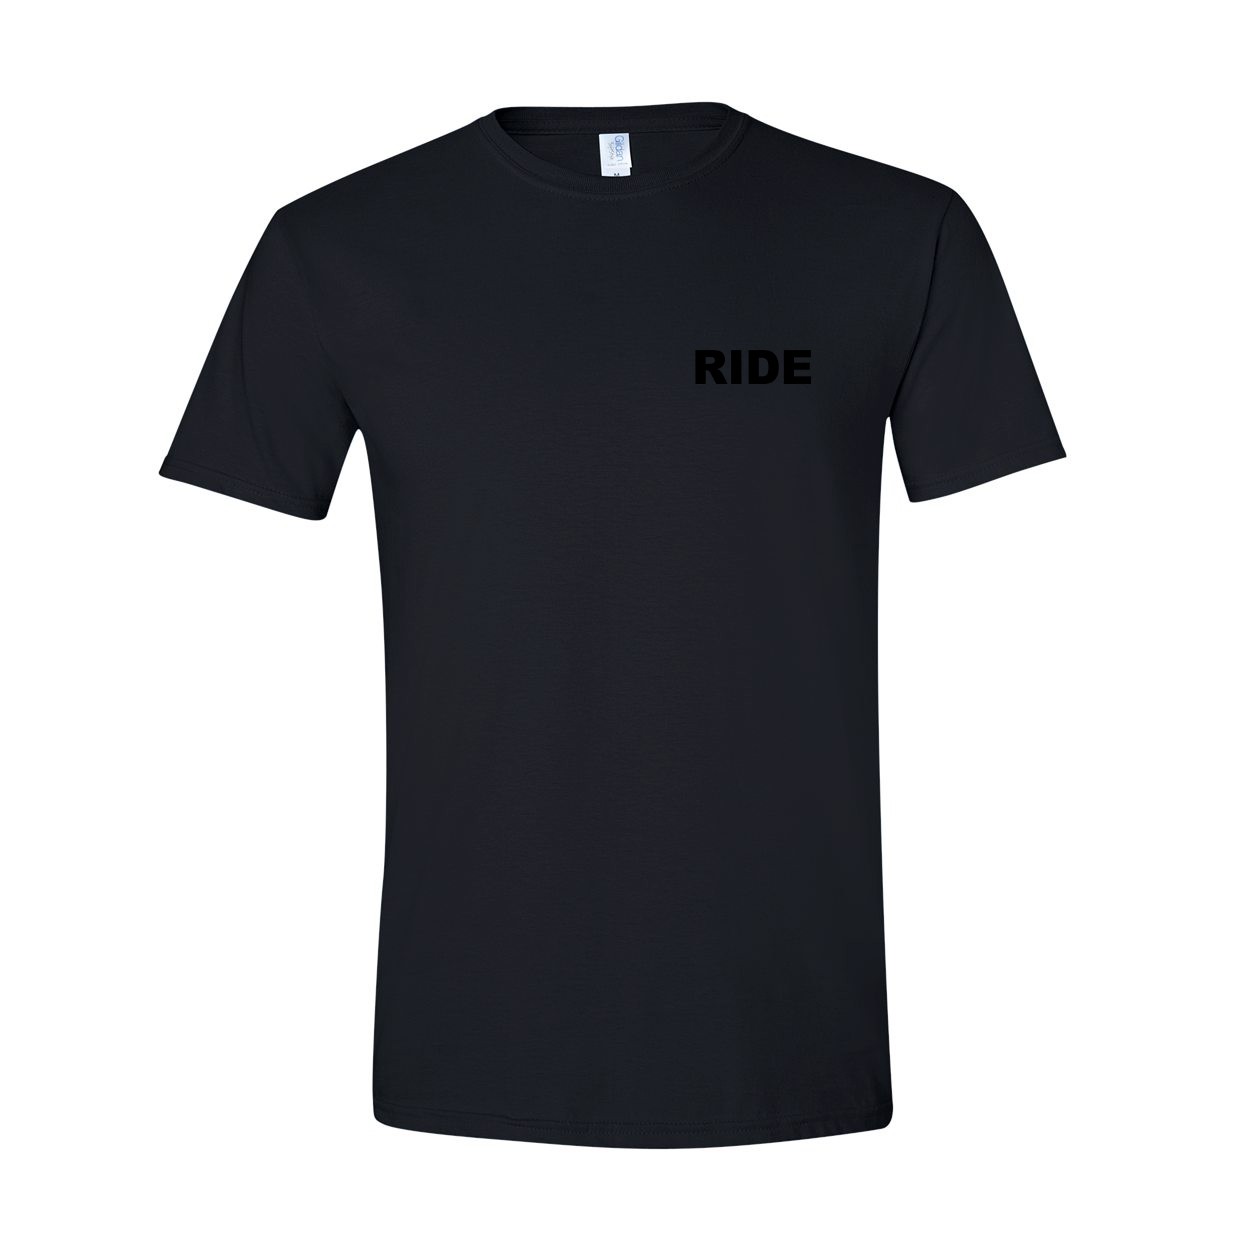 Ride Brand Logo Night Out T-Shirt Black (Black Logo)